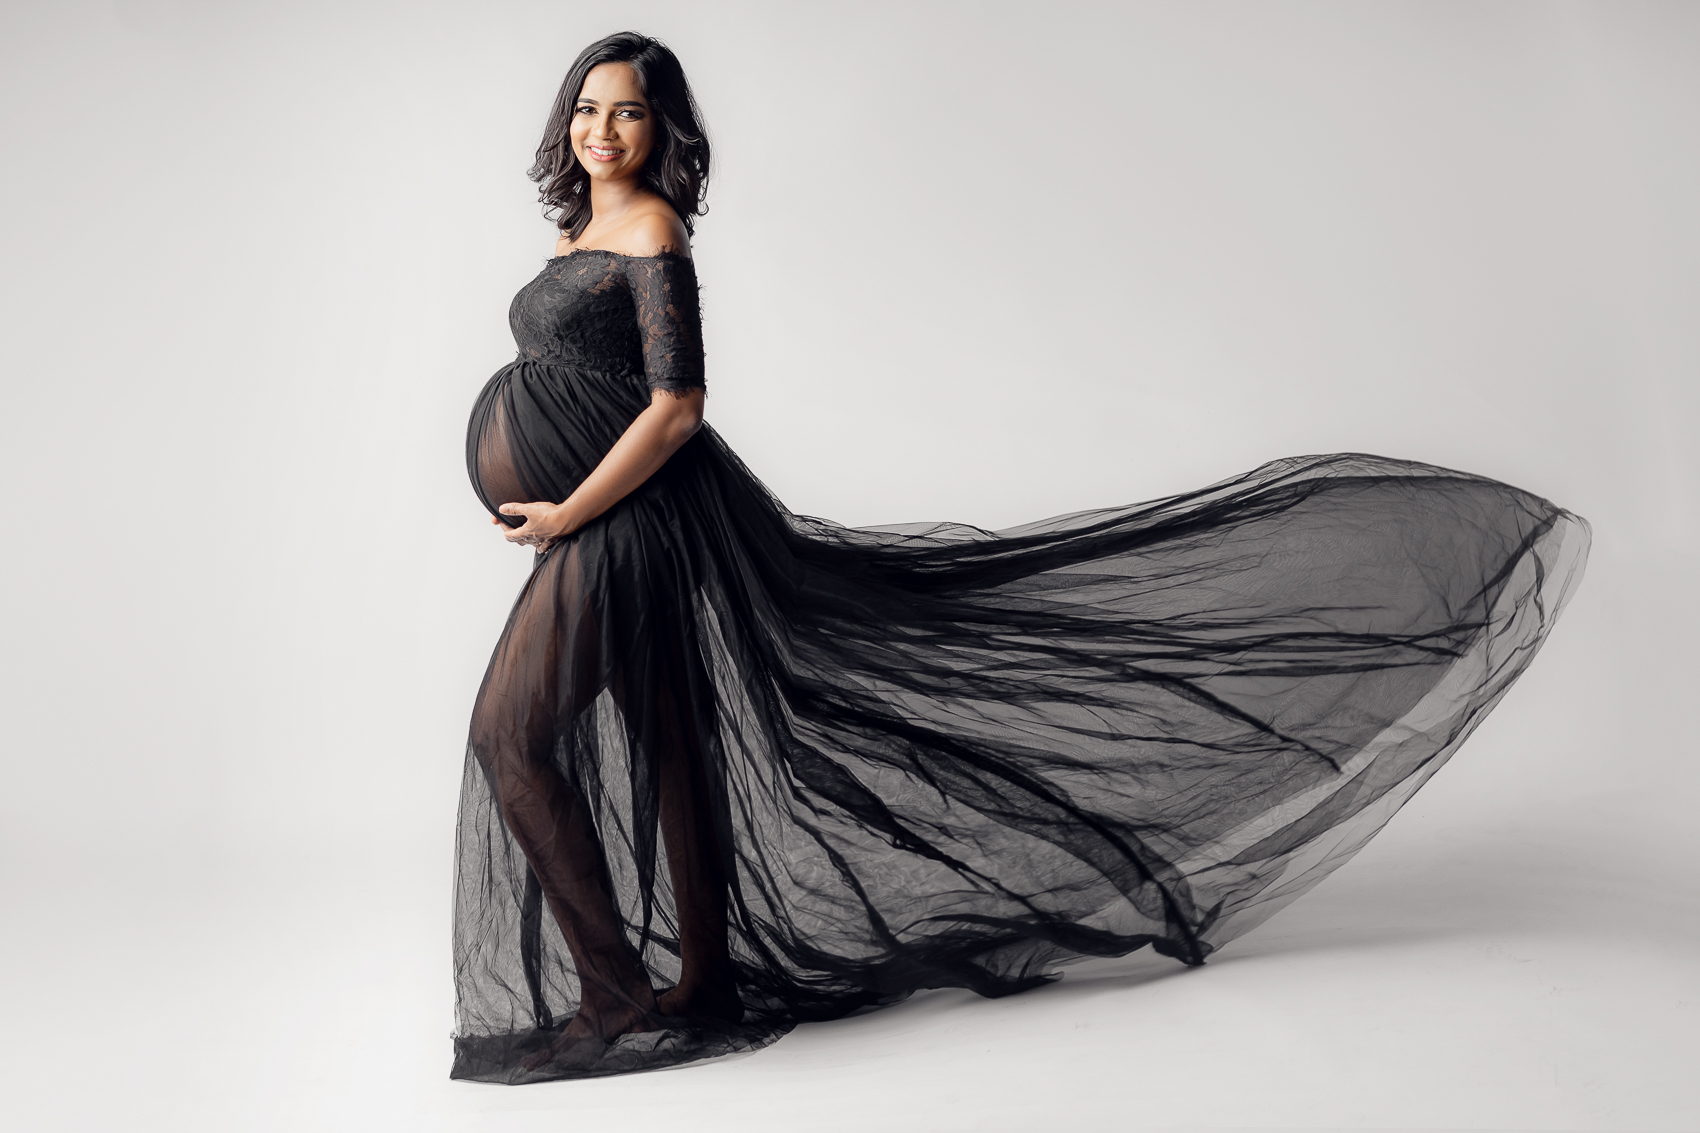 penang maternity female photographer